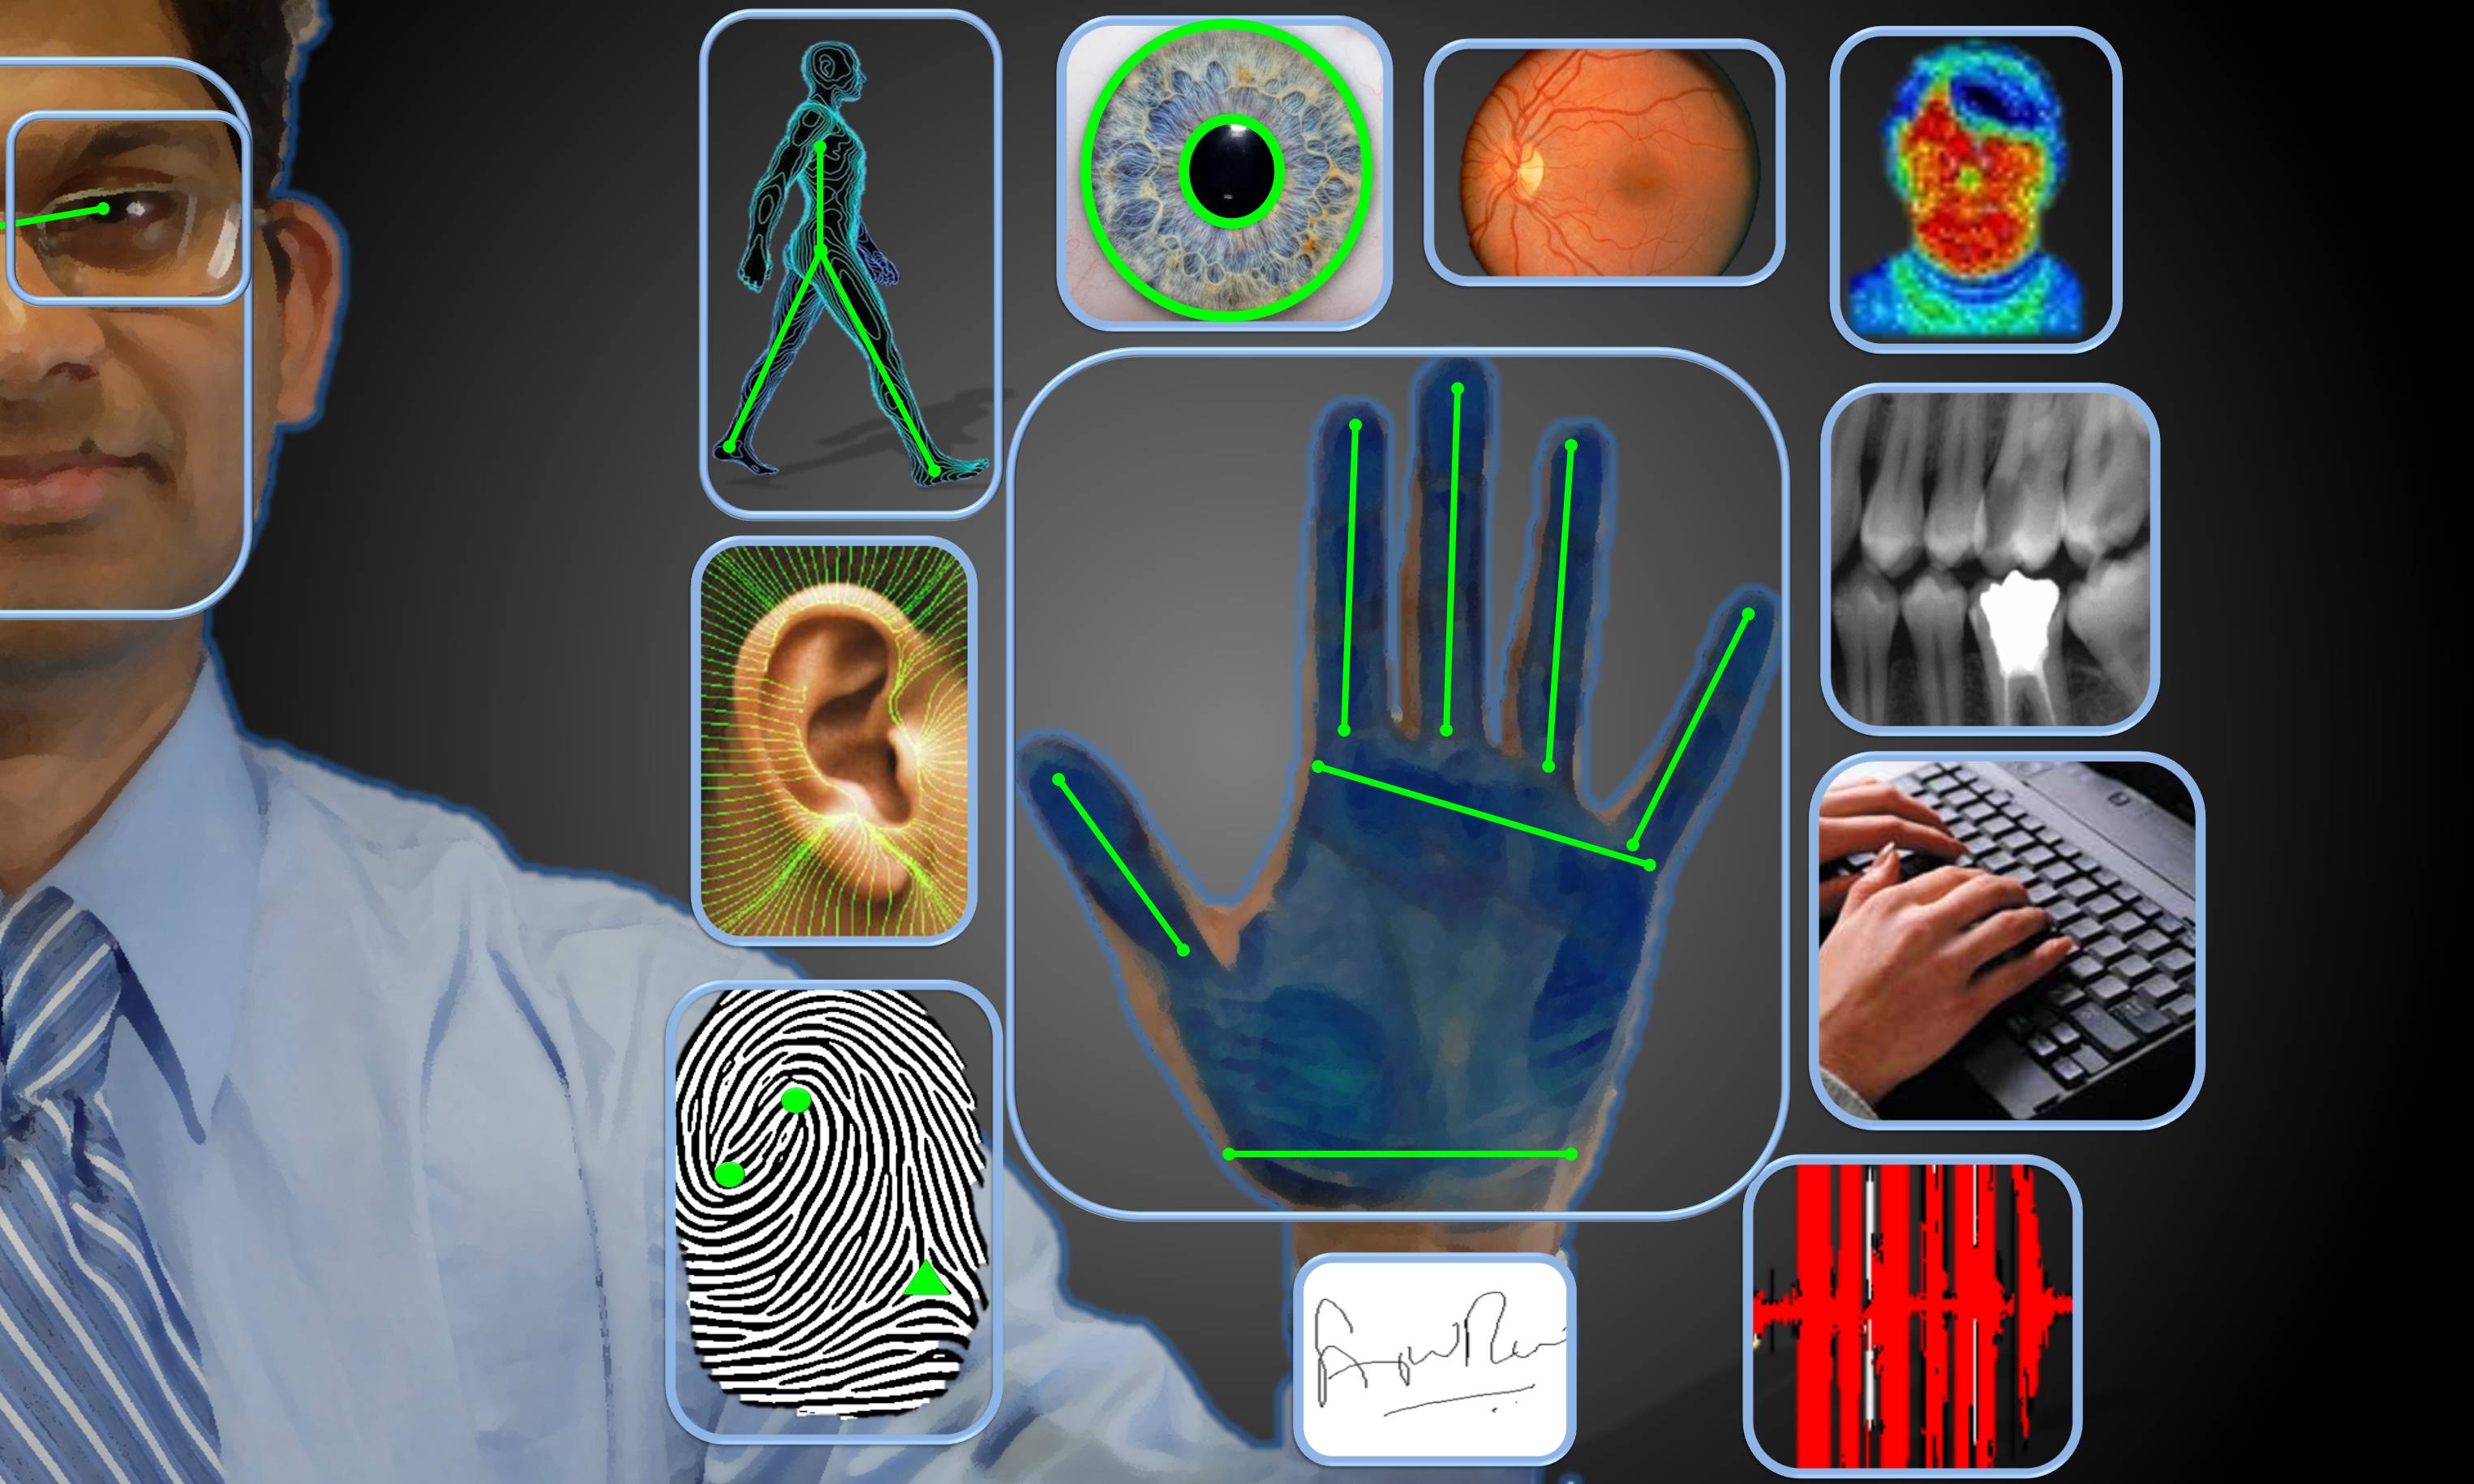 Biometrics can replace passwords, but pose a hidden threat if stolen